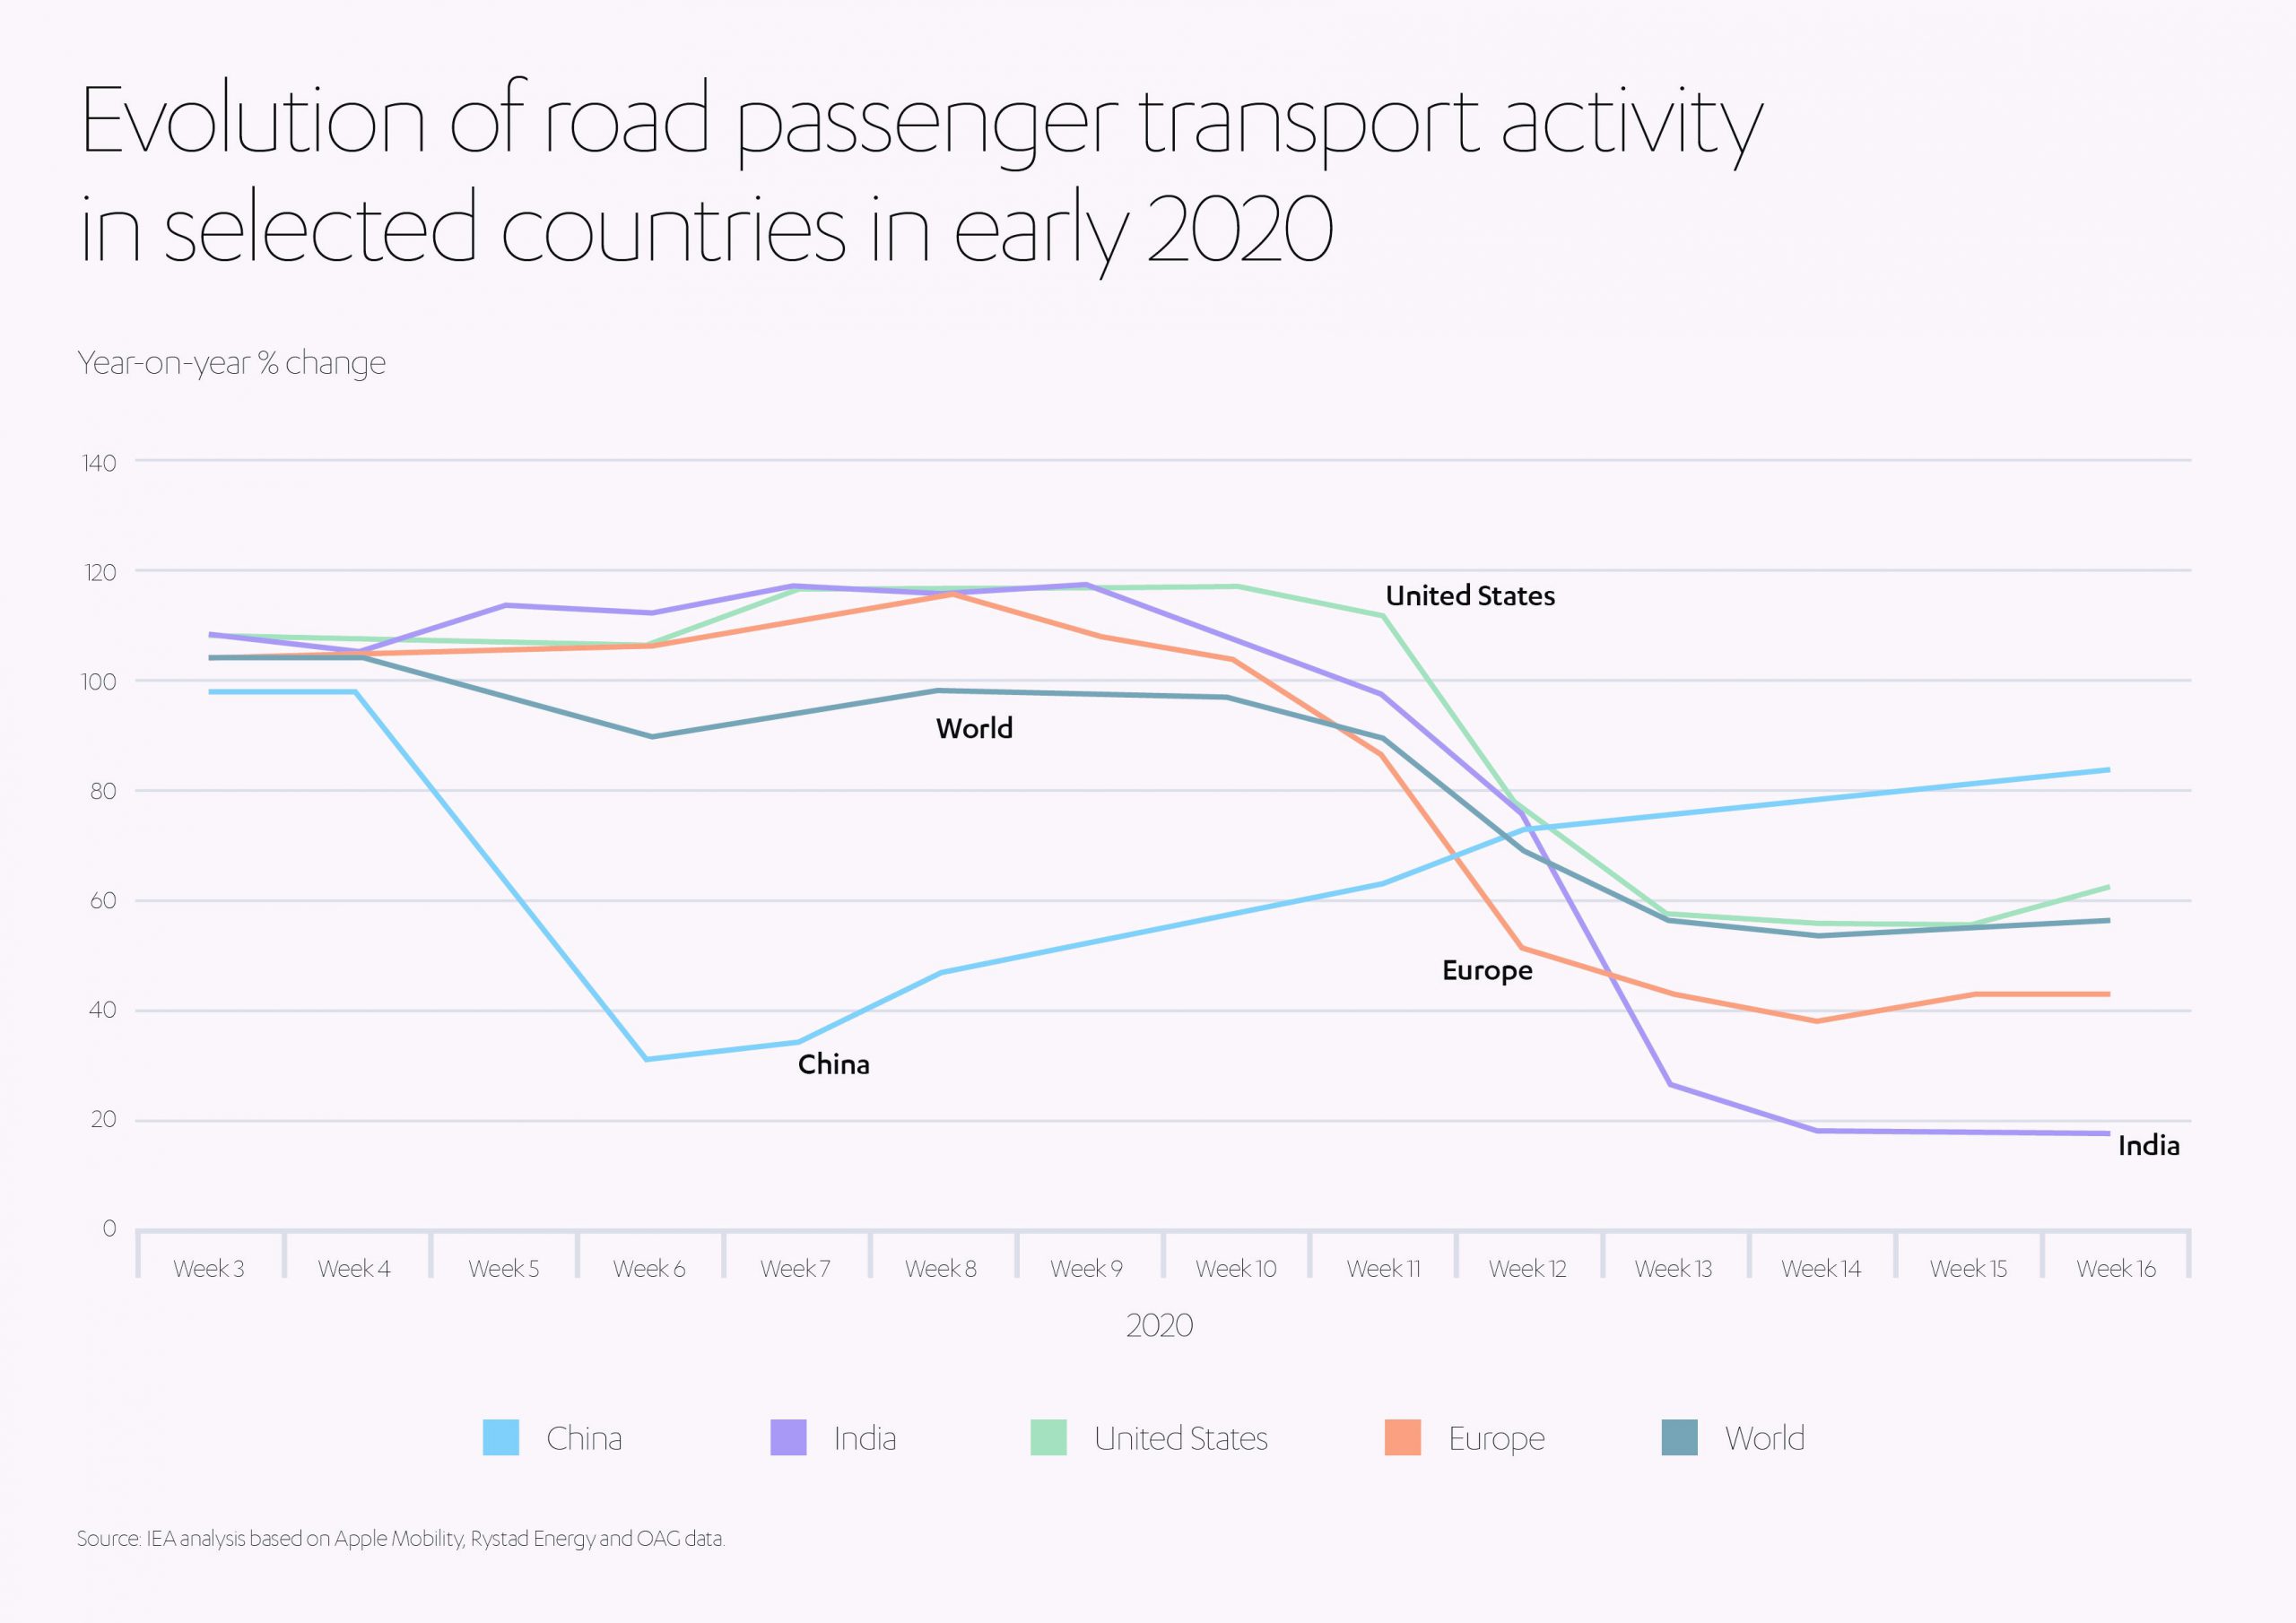 Evolution of Road Passenger Transport Activity